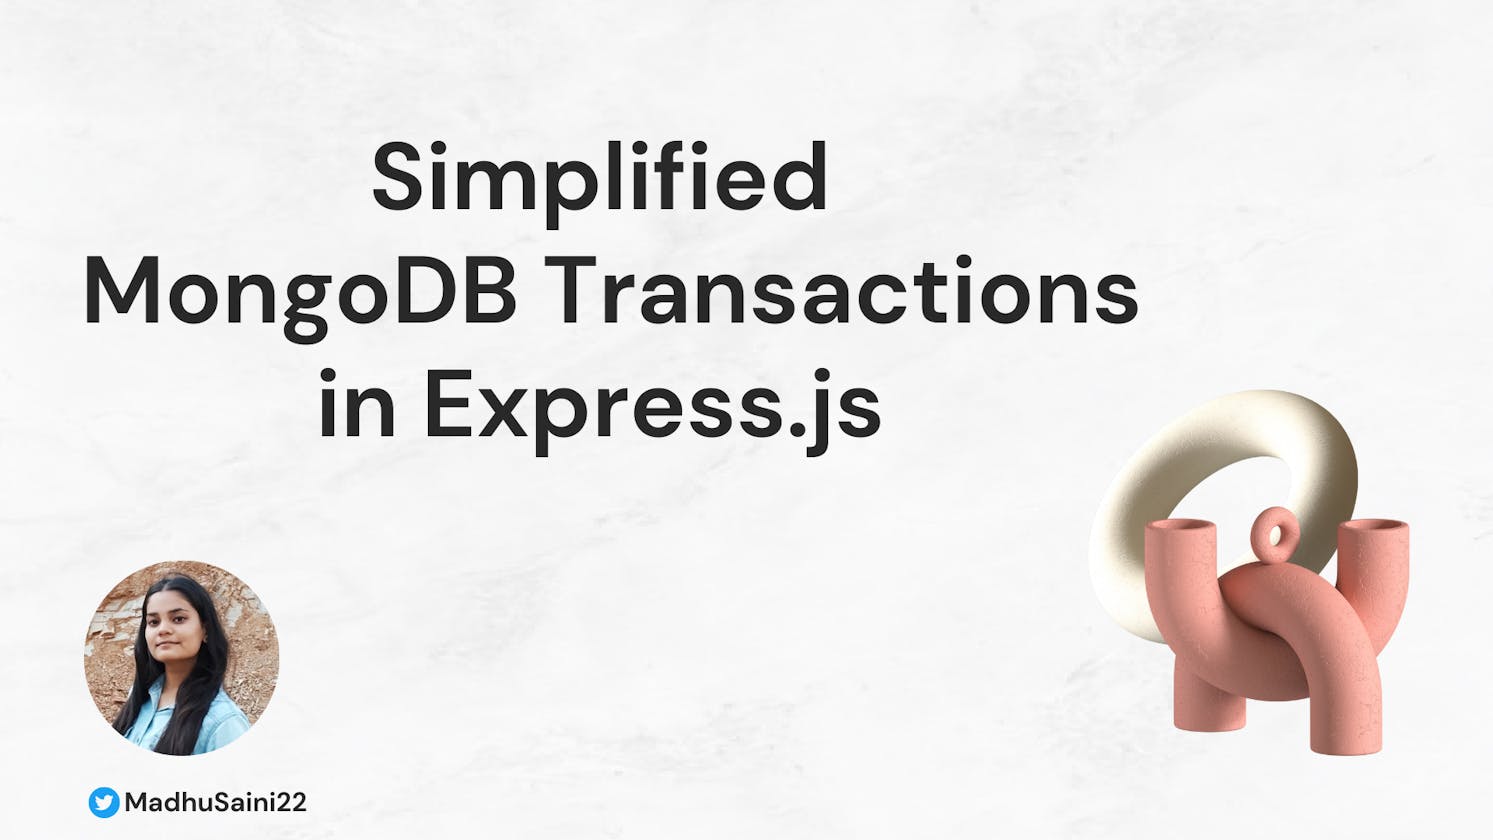 Simplified MongoDB Transactions in Express.js